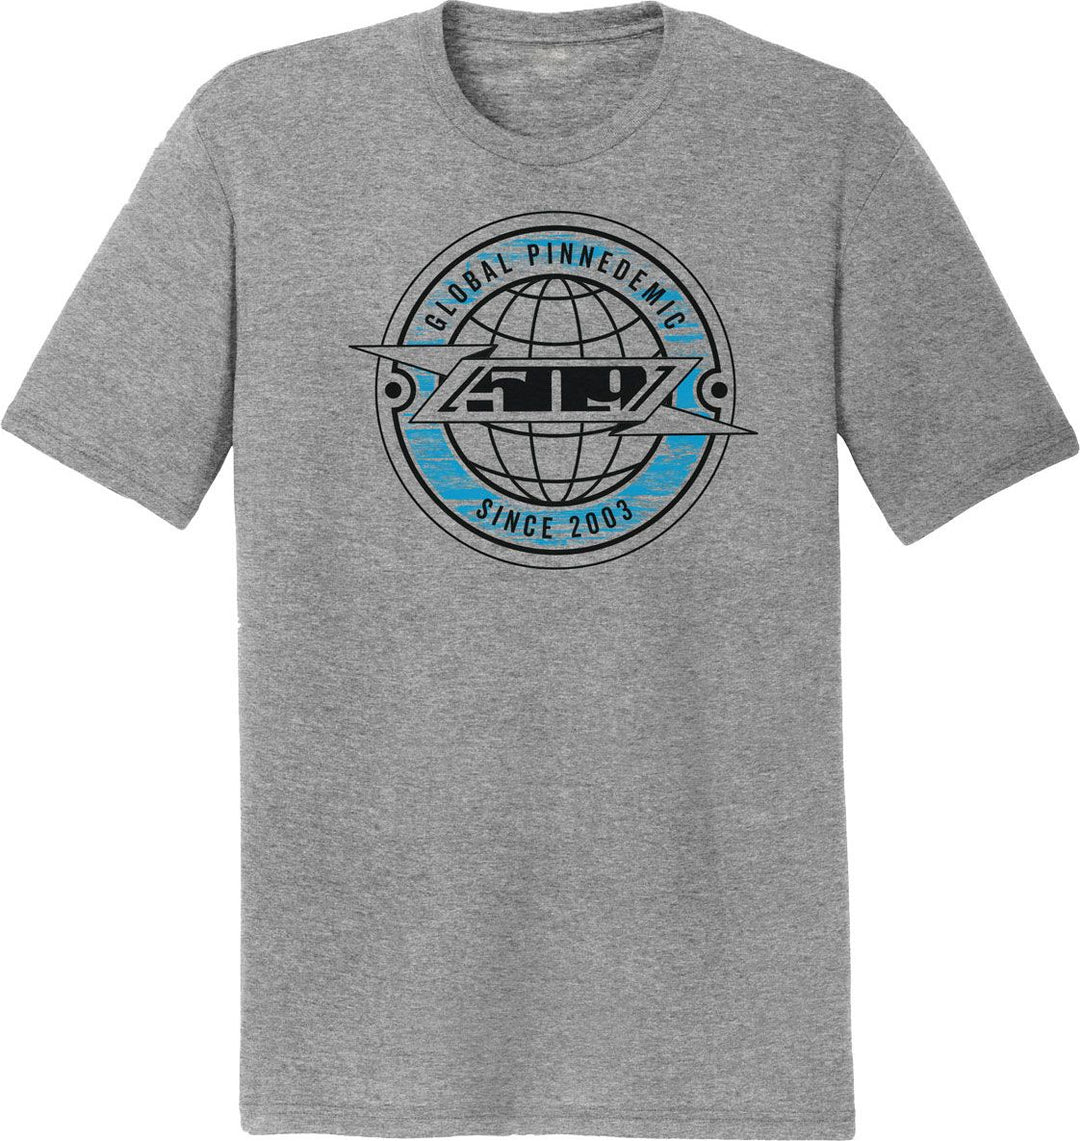 509 Pinnedemic T-Shirt - Gray - F09011300